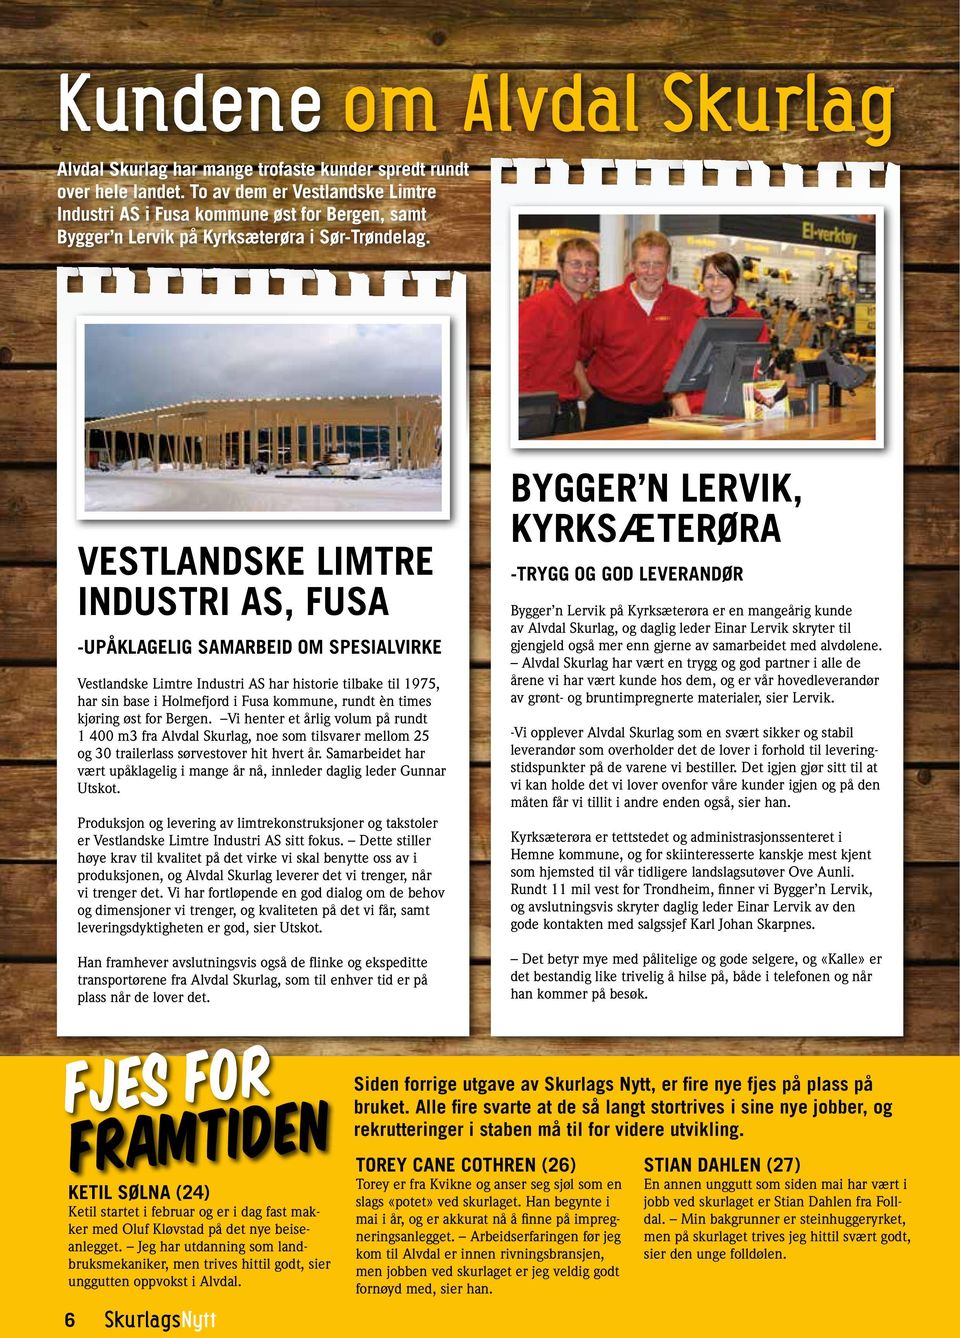 Vestlandske Limtre Industri AS, Fusa -Upåklagelig samarbeid om spesialvirke Vestlandske Limtre Industri AS har historie tilbake til 1975, har sin base i Holmefjord i Fusa kommune, rundt èn times